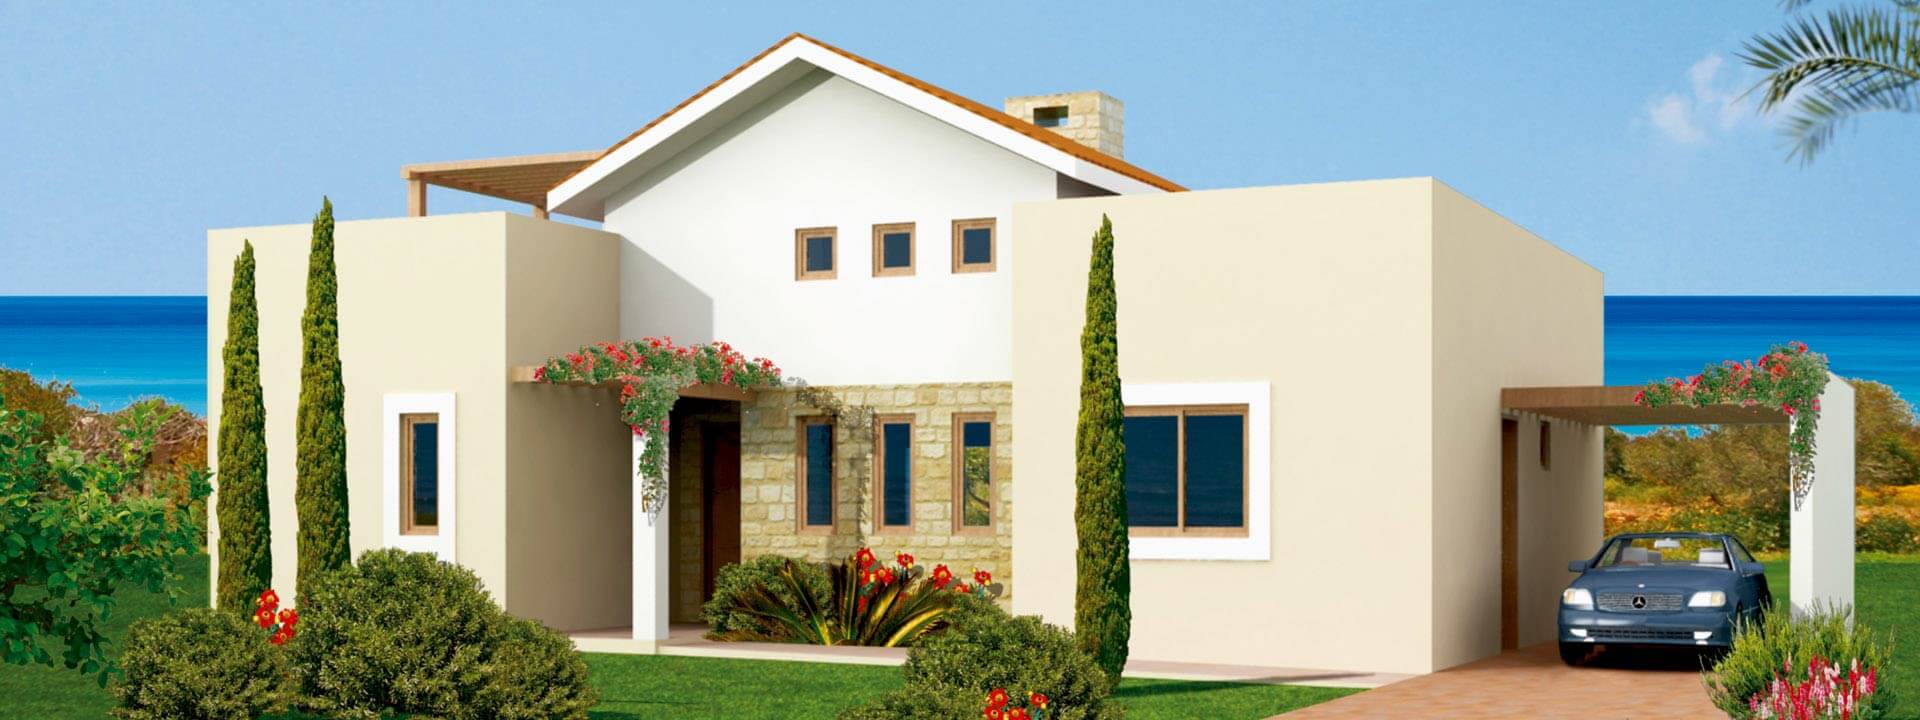 Limassol Monagroulli Hills 3 Bedroom Villa For Sale RSD0341